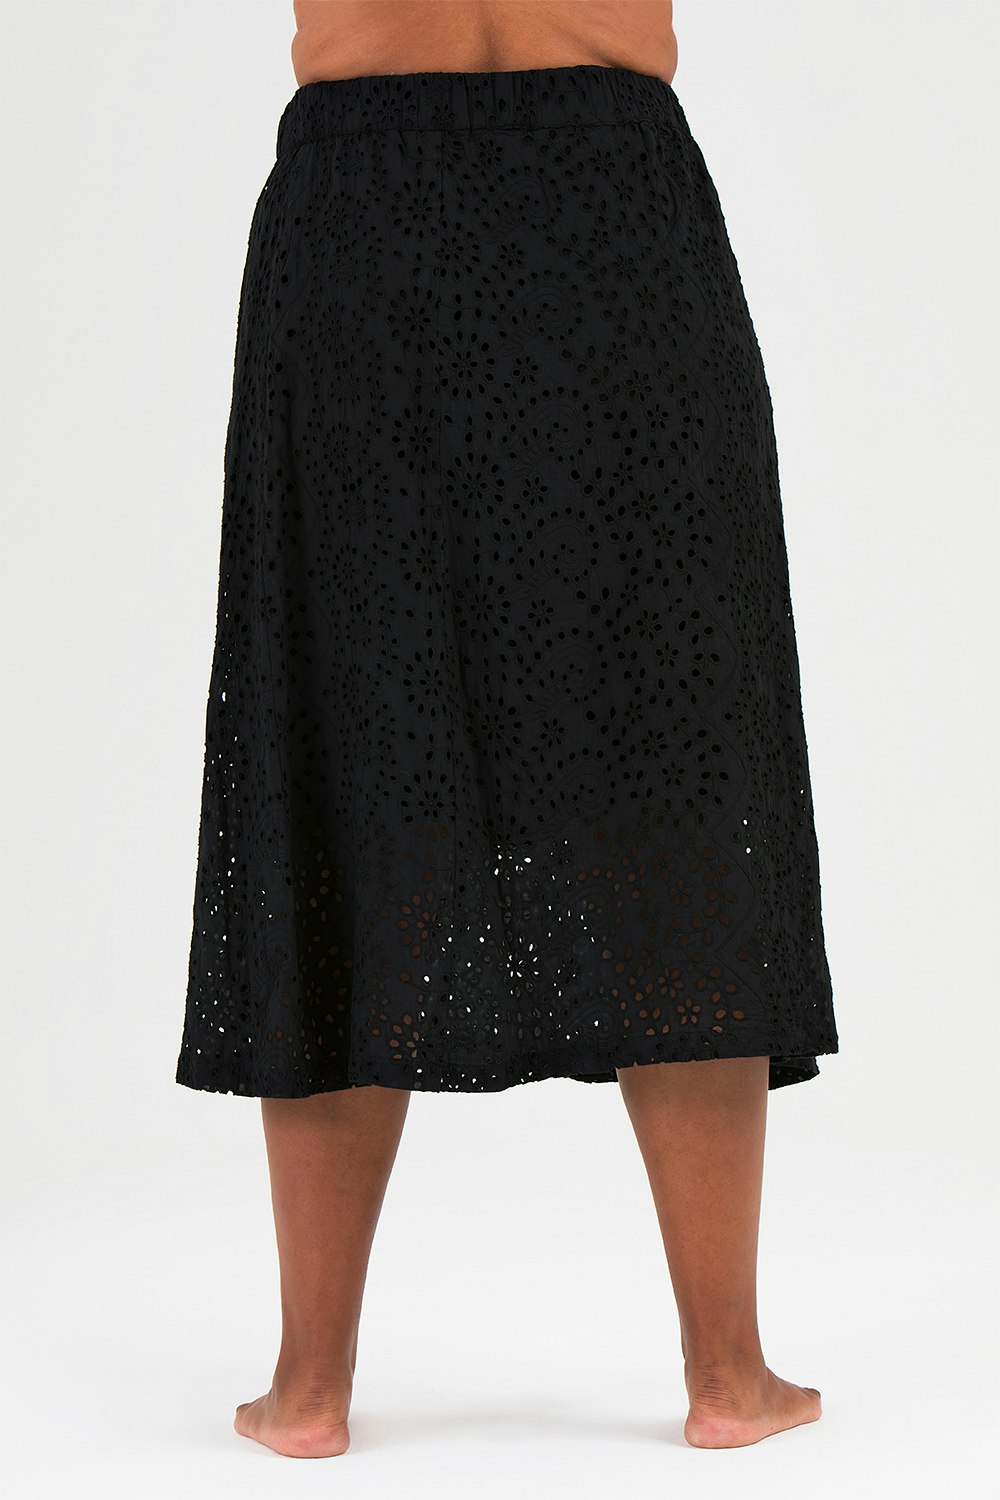 Nio skirt black embroidery